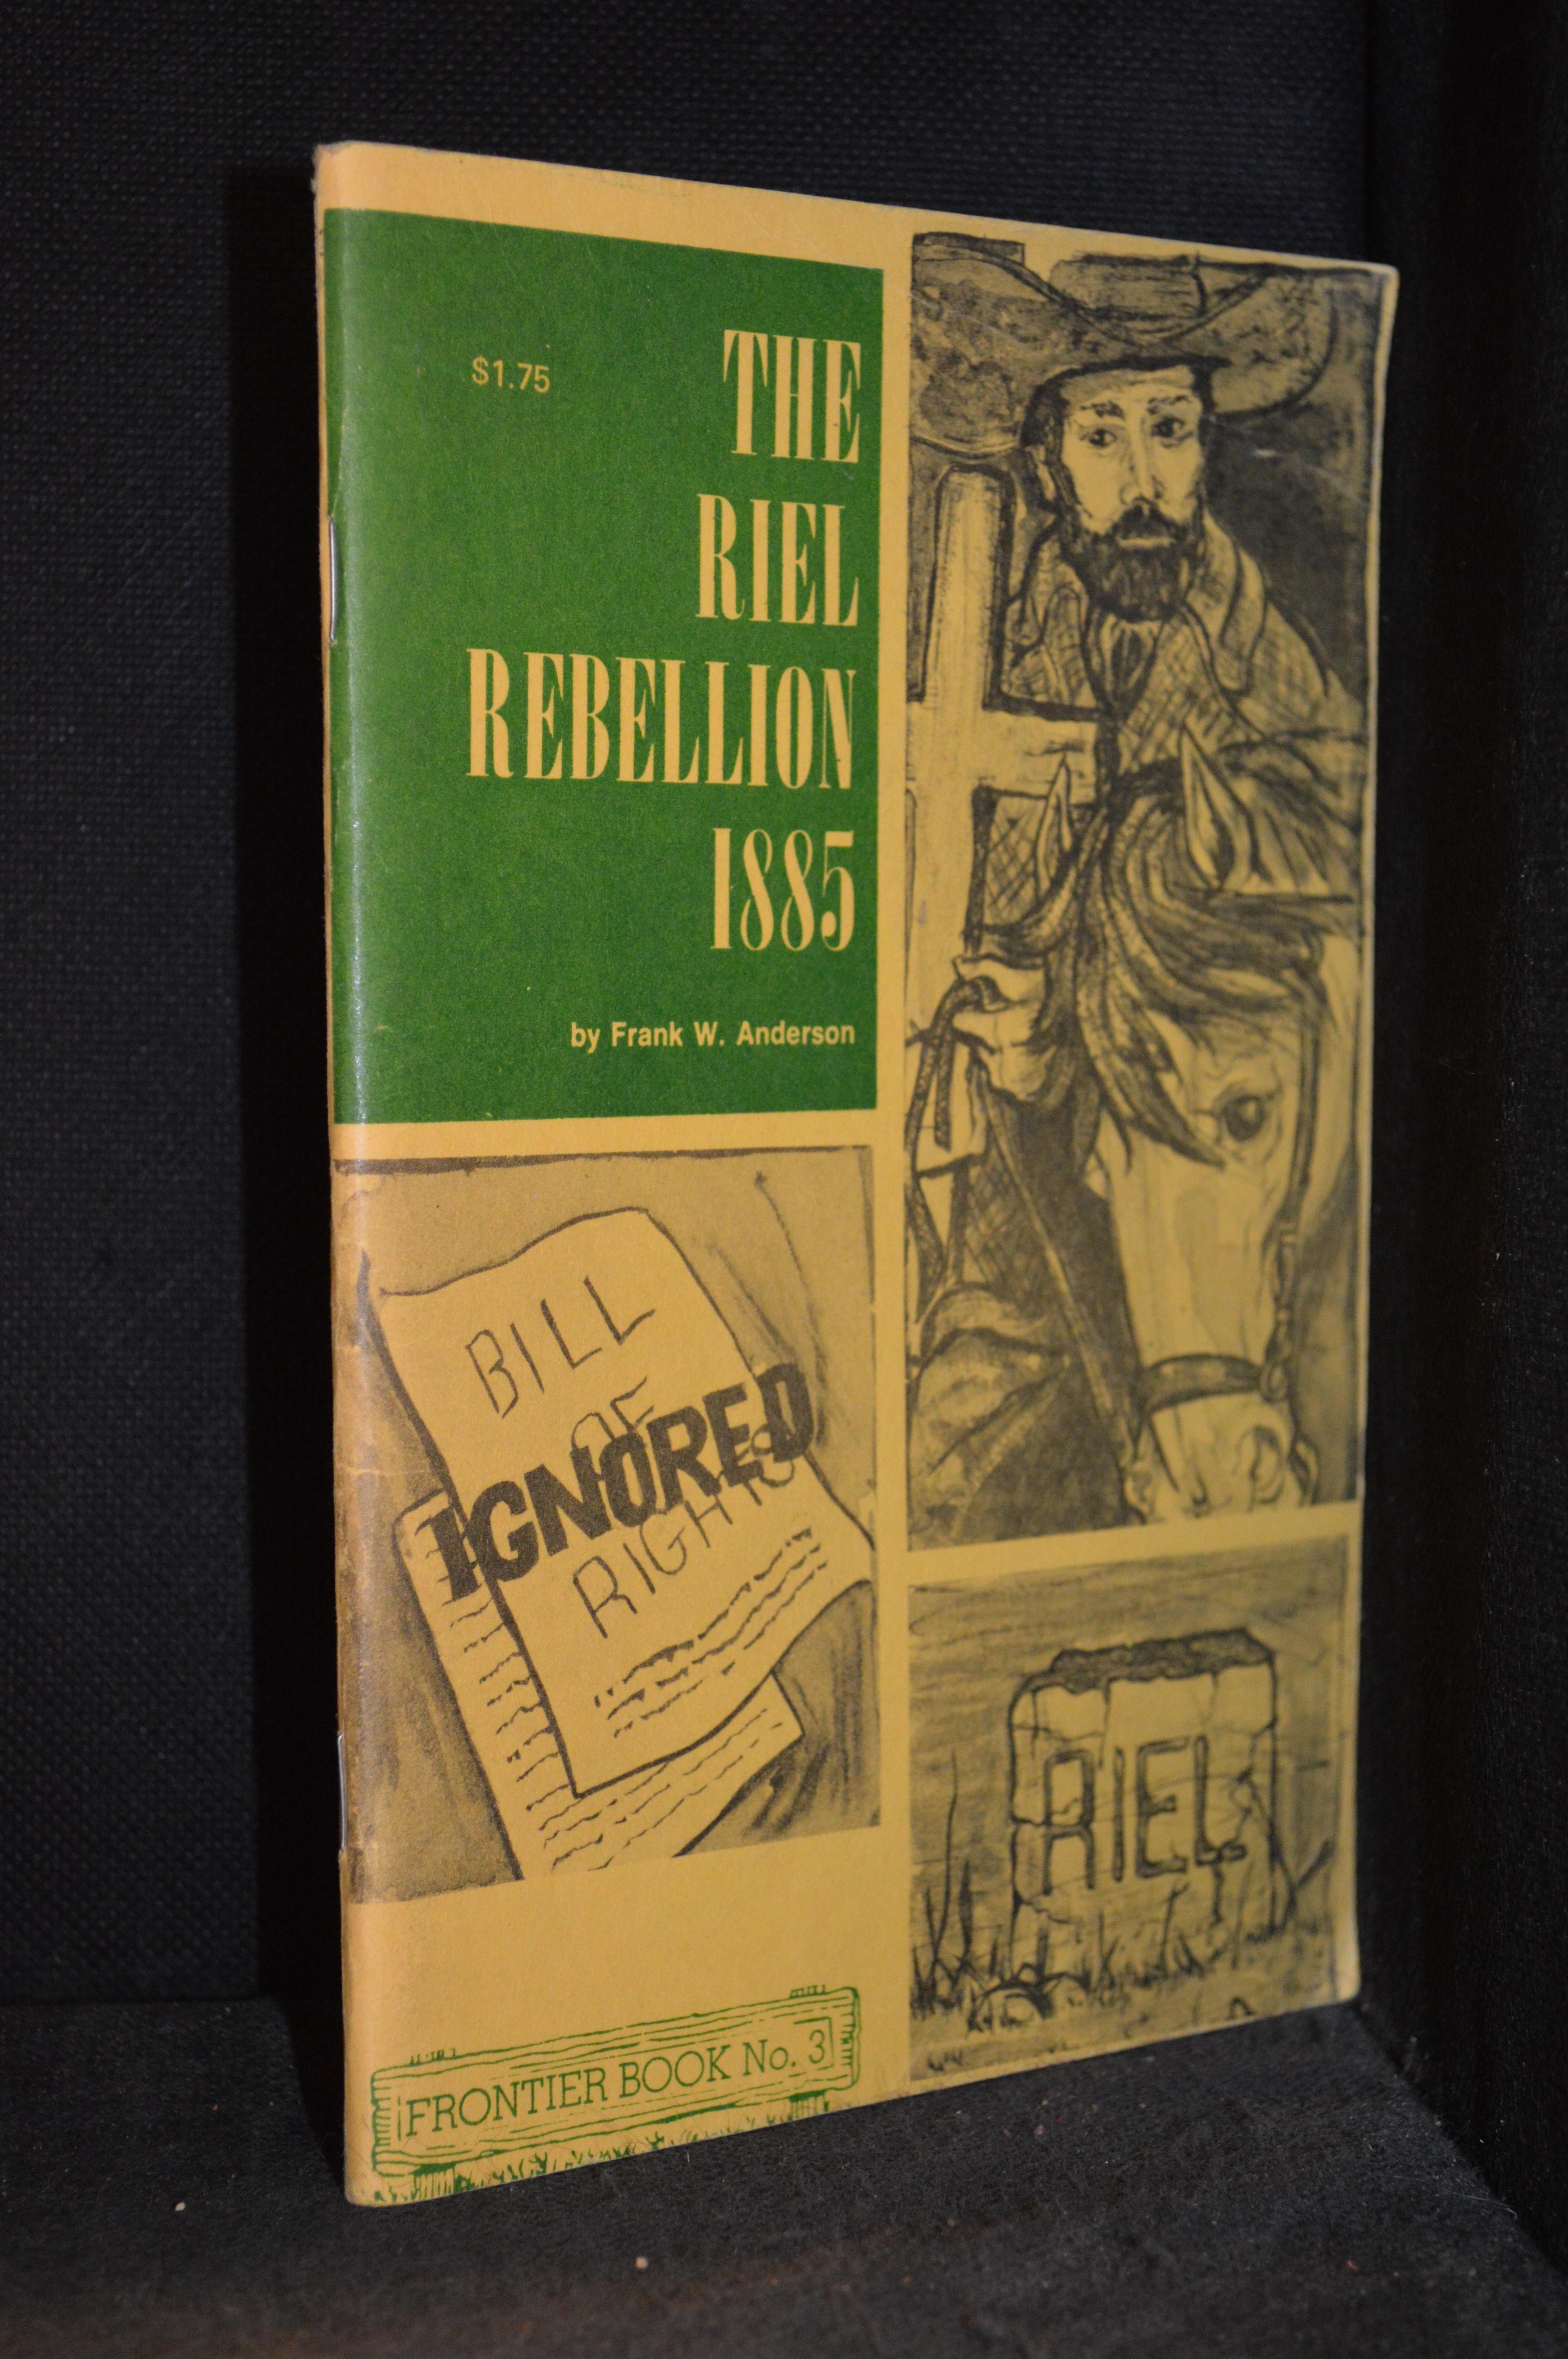 The Riel Rebellion, 1885 (Includes Batoche Today; Robert K. Allan--Soldier's Diary; Frank Anderson--Riel Rebellion: 1885; Frank Anderson--Riel's Manitoba Uprising; Publisher series: Frontier Books.) - Anderson, Frank (Includes Robert K. Allan: Soldier's Diary; Frank Anderson: Riel Rebellion: 1885; Frank Anderson: Riel's Manitoba Uprising.)